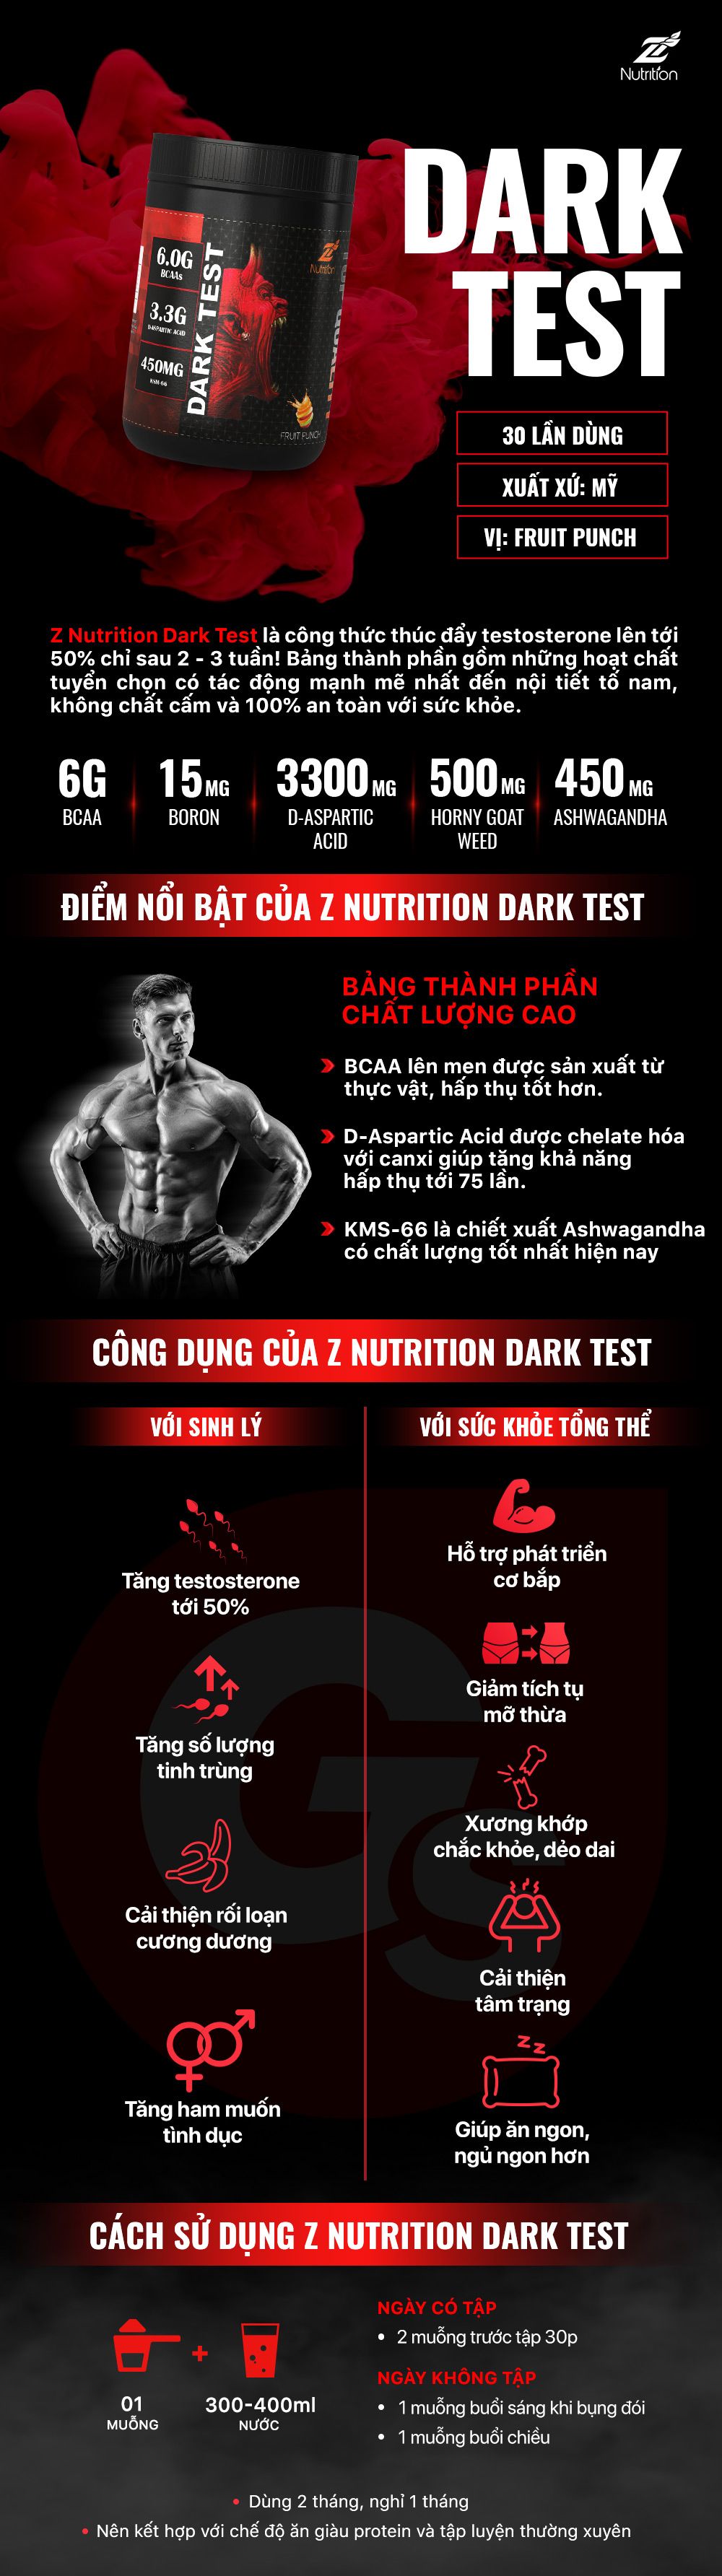 z-nutrition-dark-test-tang-testosterone-gymstore